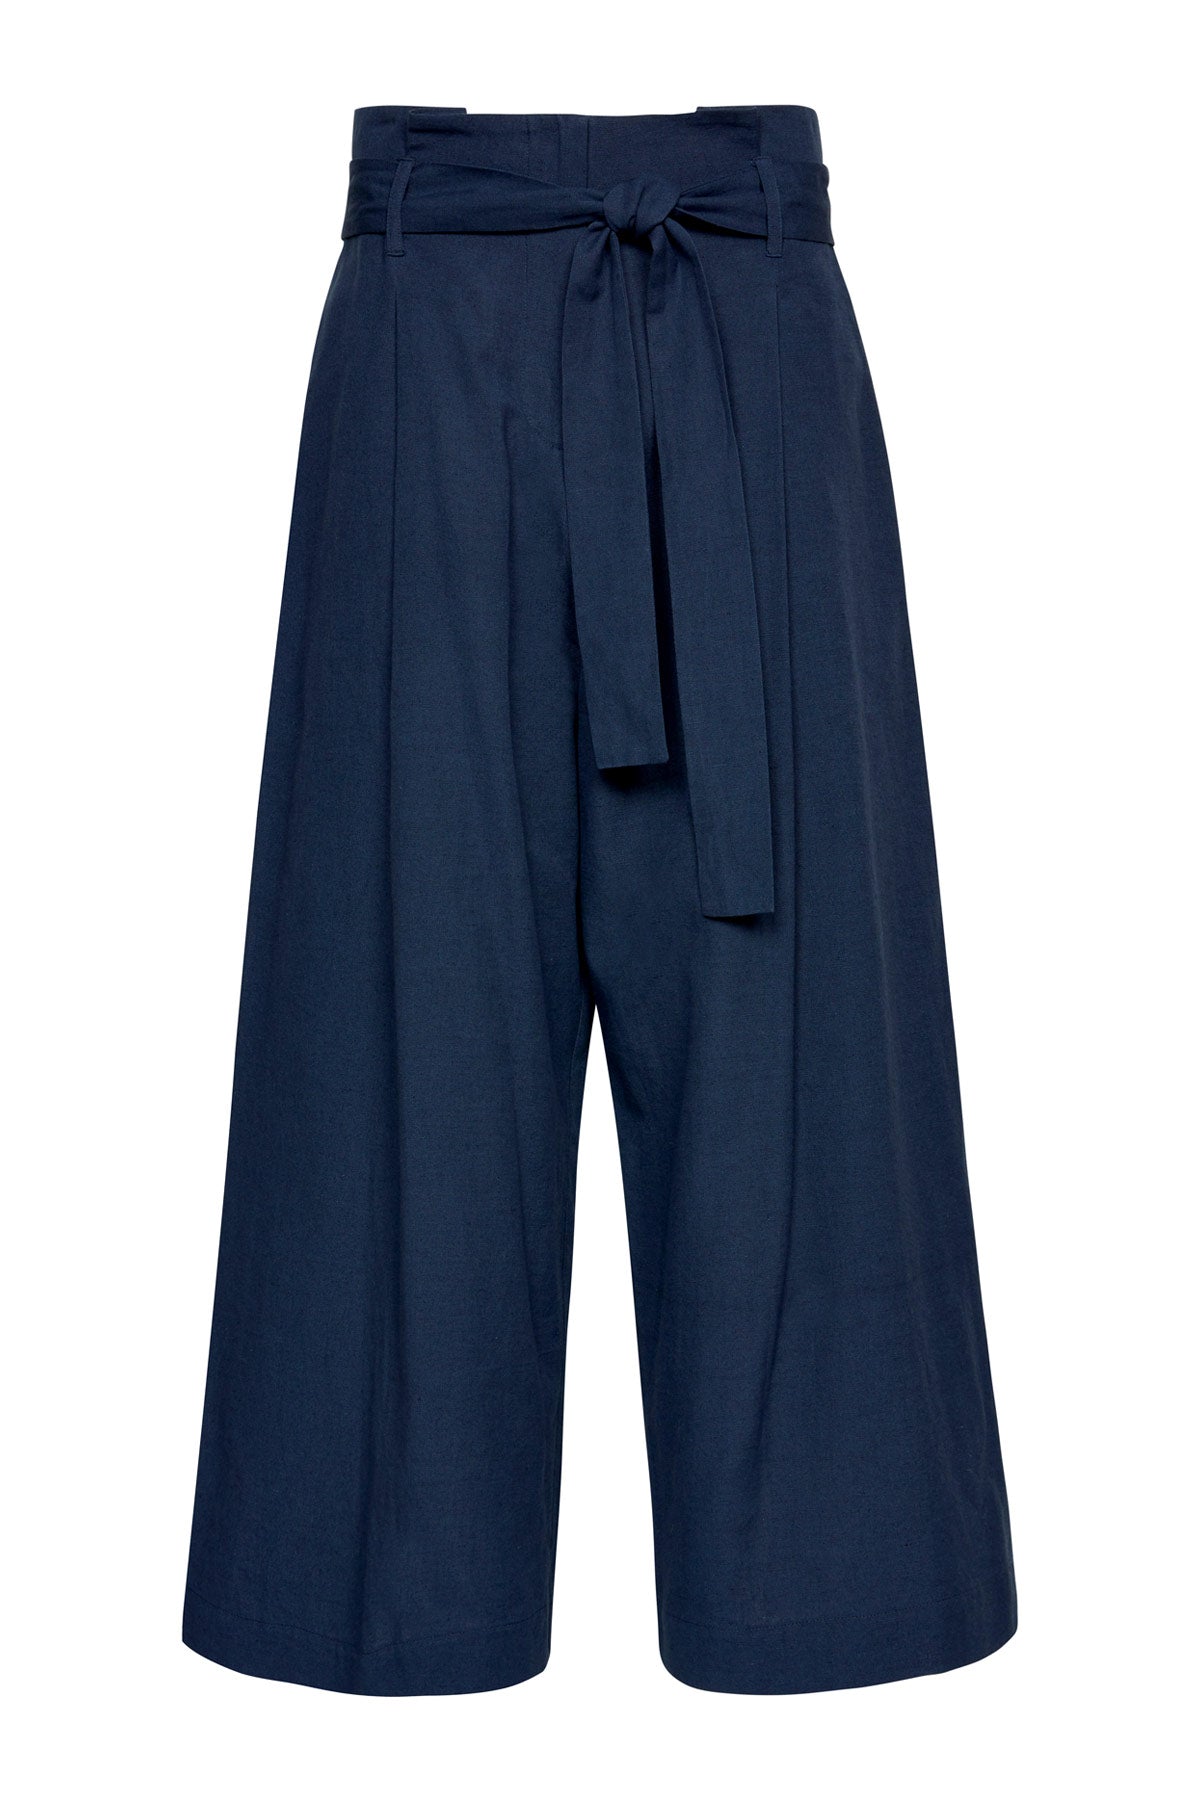 Image of Gilda Navy Trouser Carryover - Trouser